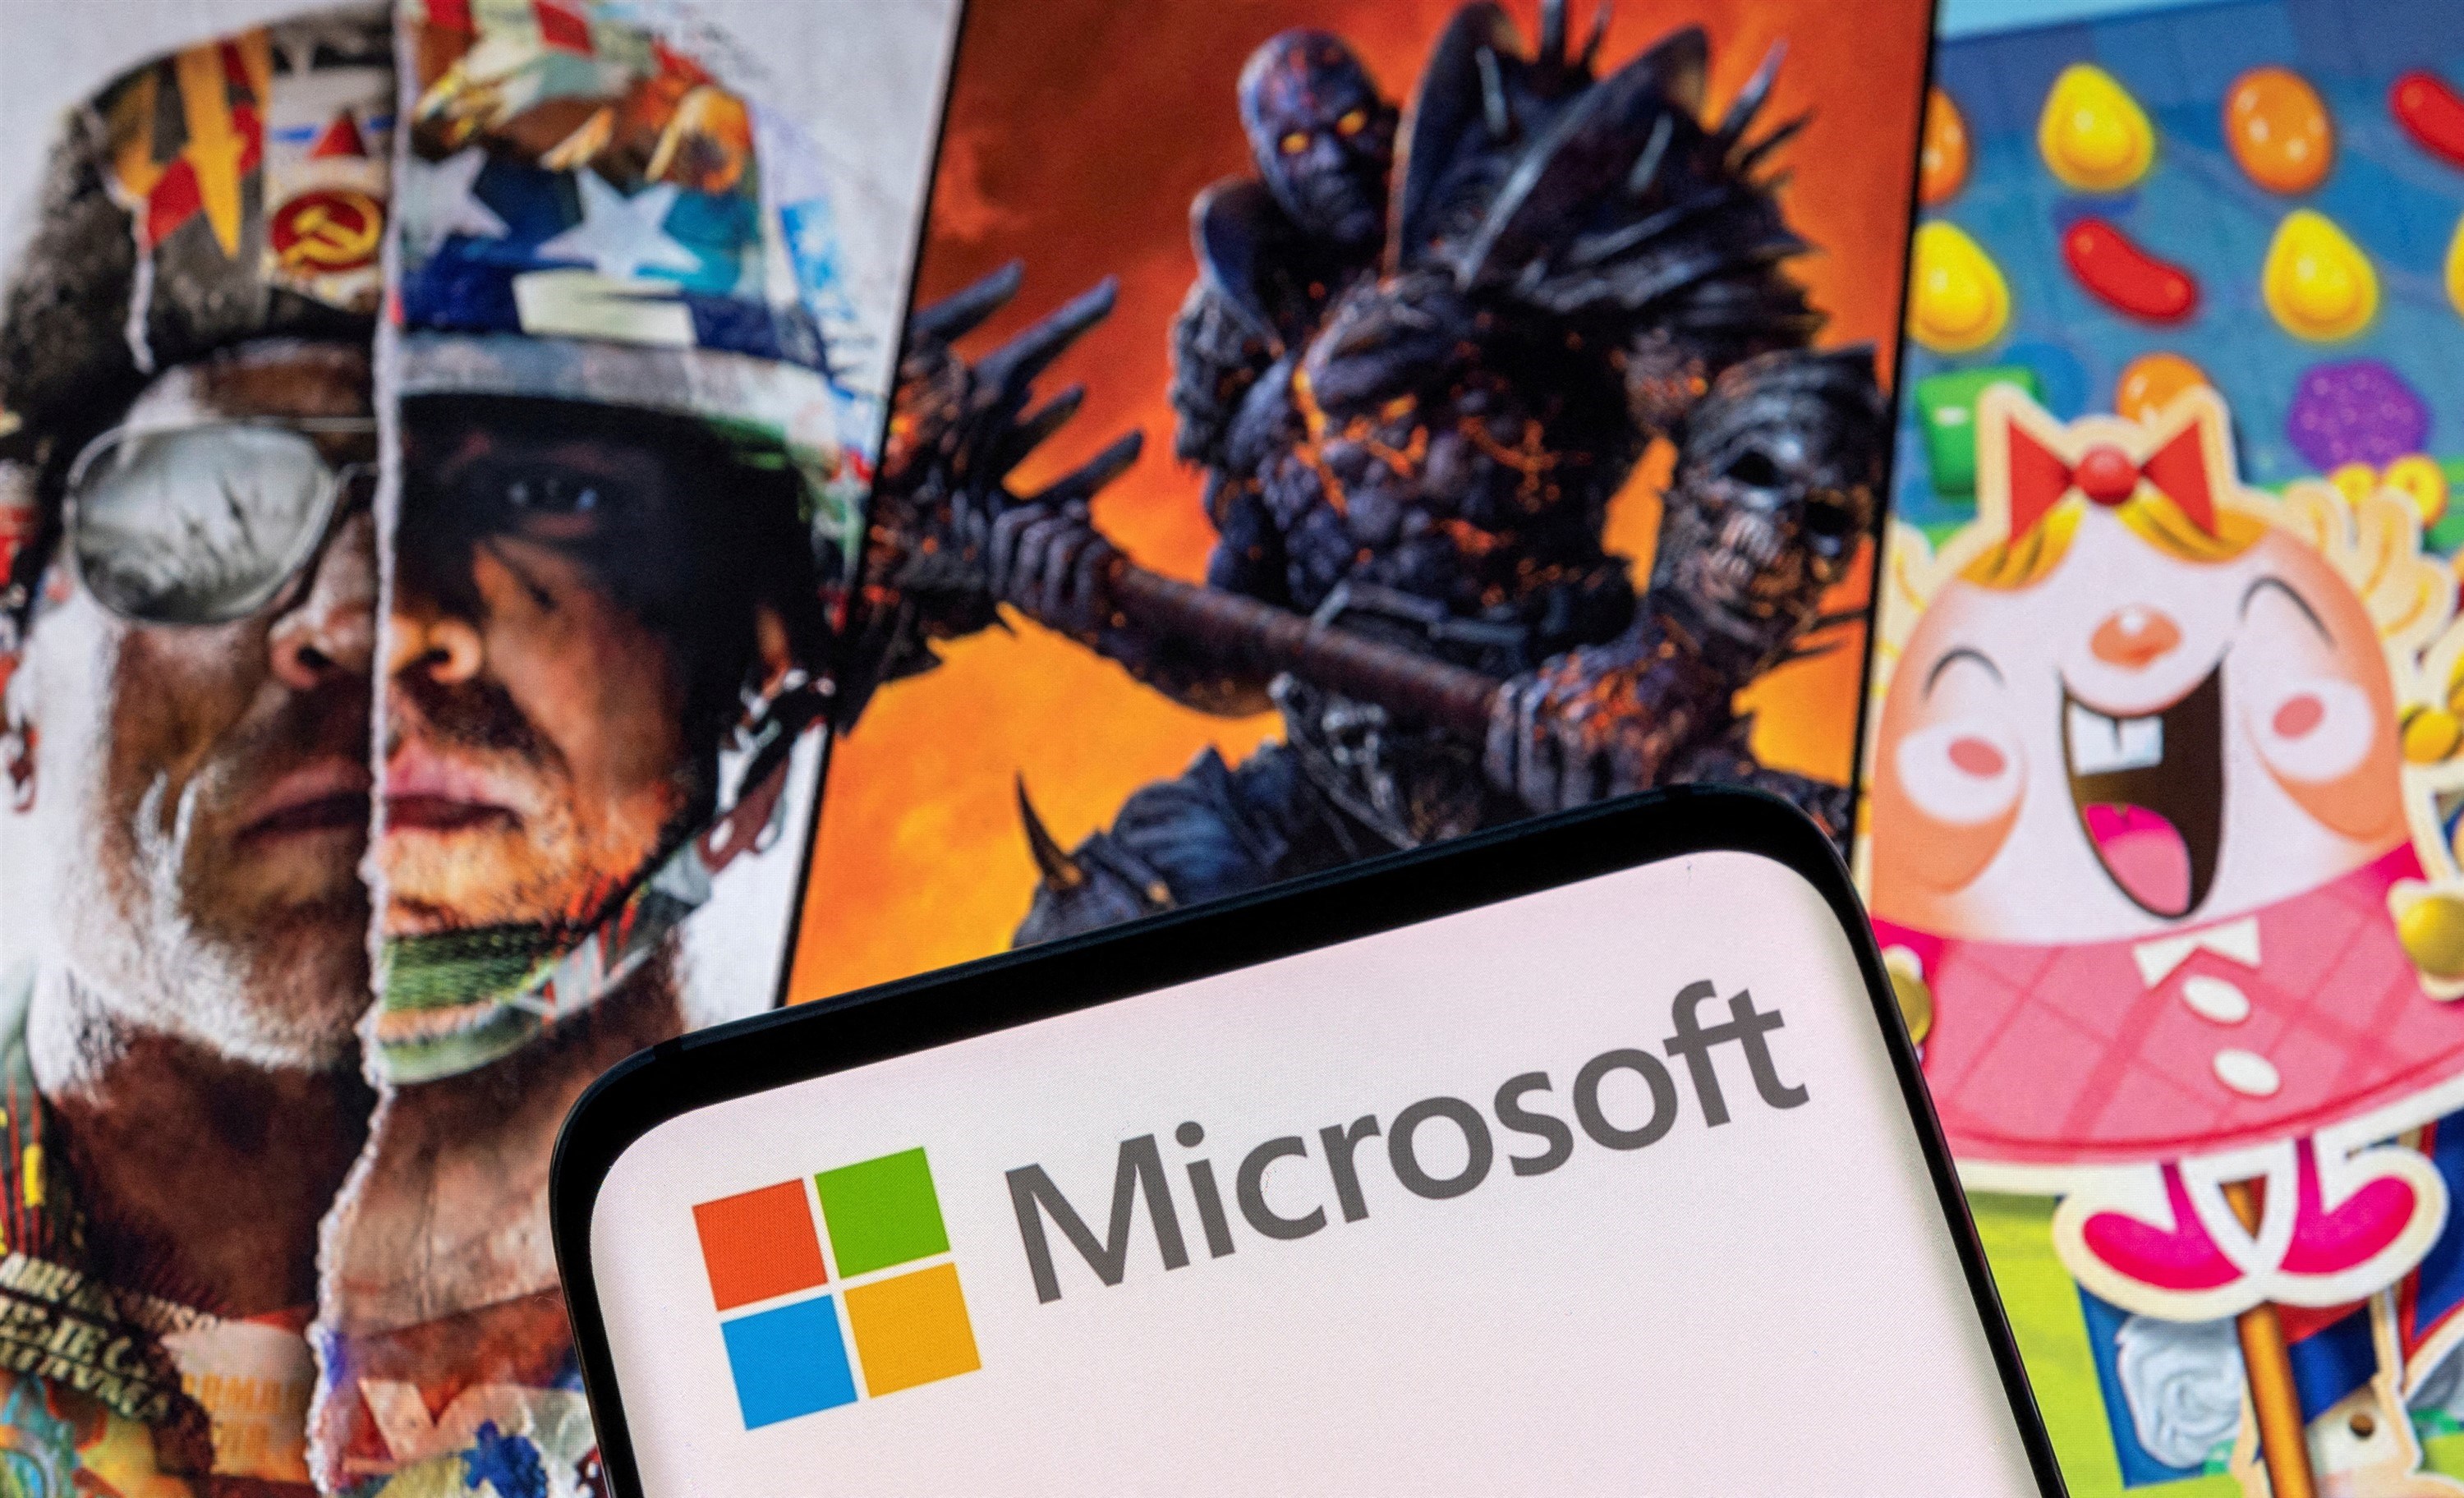 Avrupa, Microsoft’un Activision satın alımını onayladı!